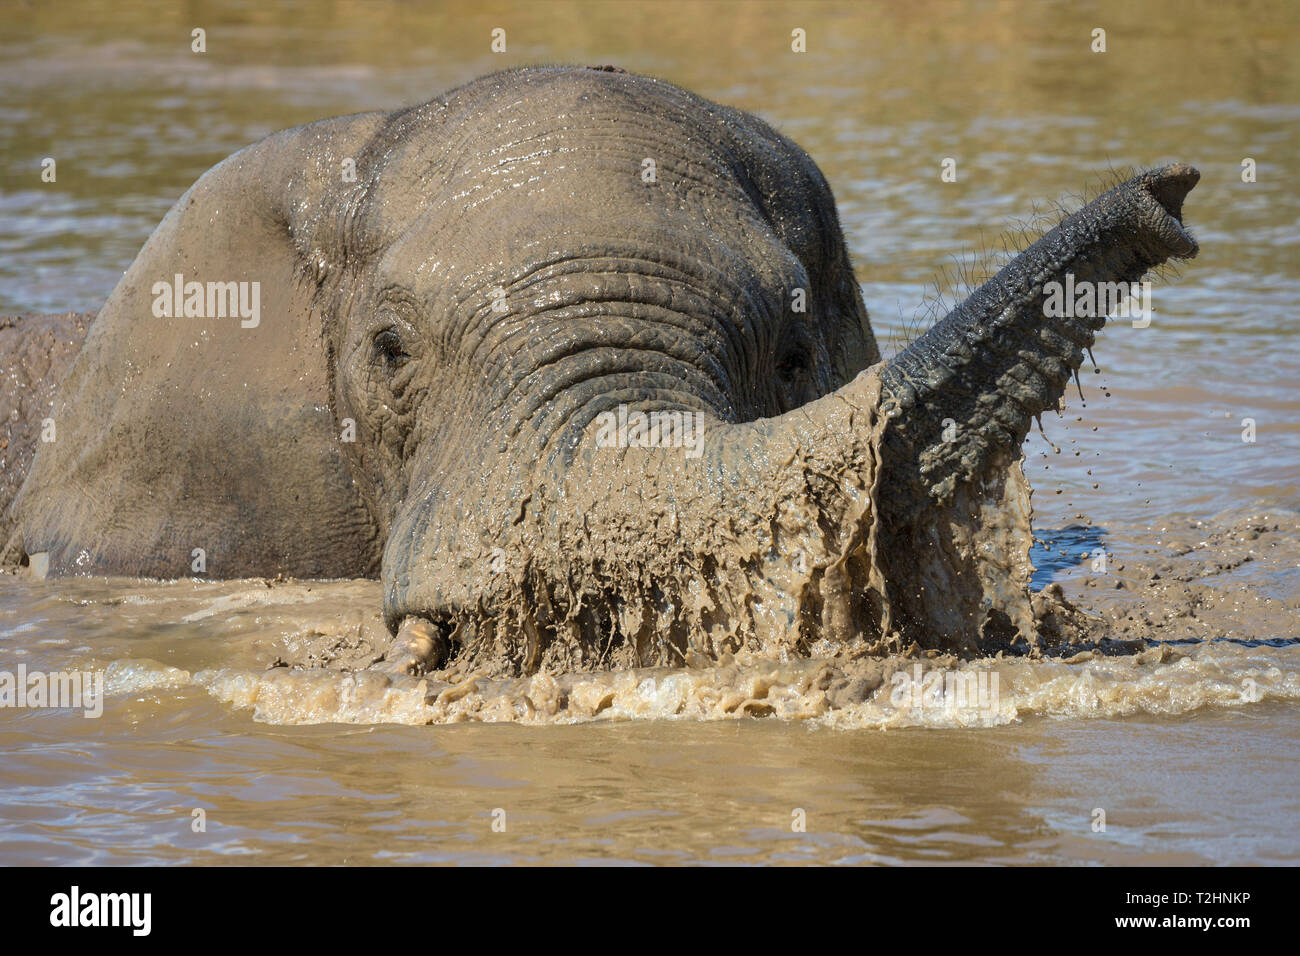 African elephant, Loxodonta africana, bathing, Addo elephant national park, Eastern Cape, South Africa Stock Photo